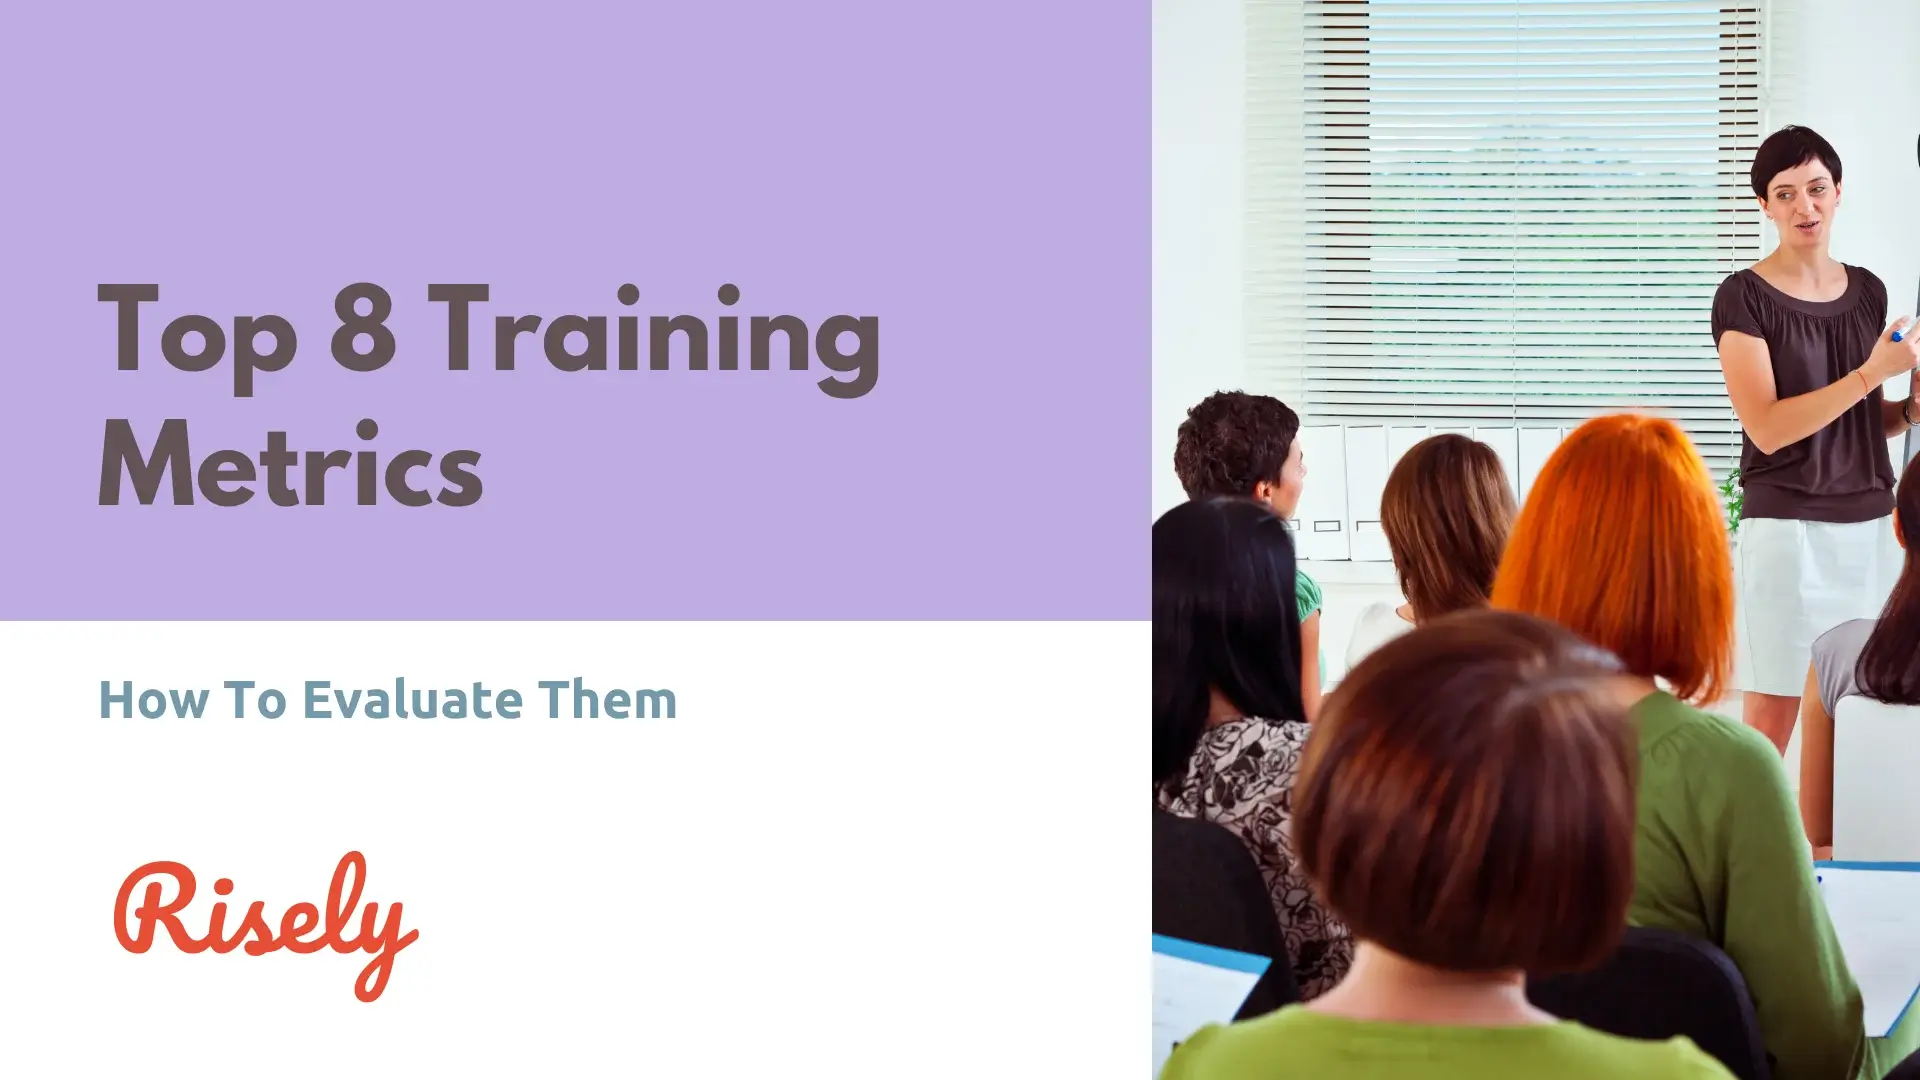 Top 8 Training Metrics & How To Evaluate Them